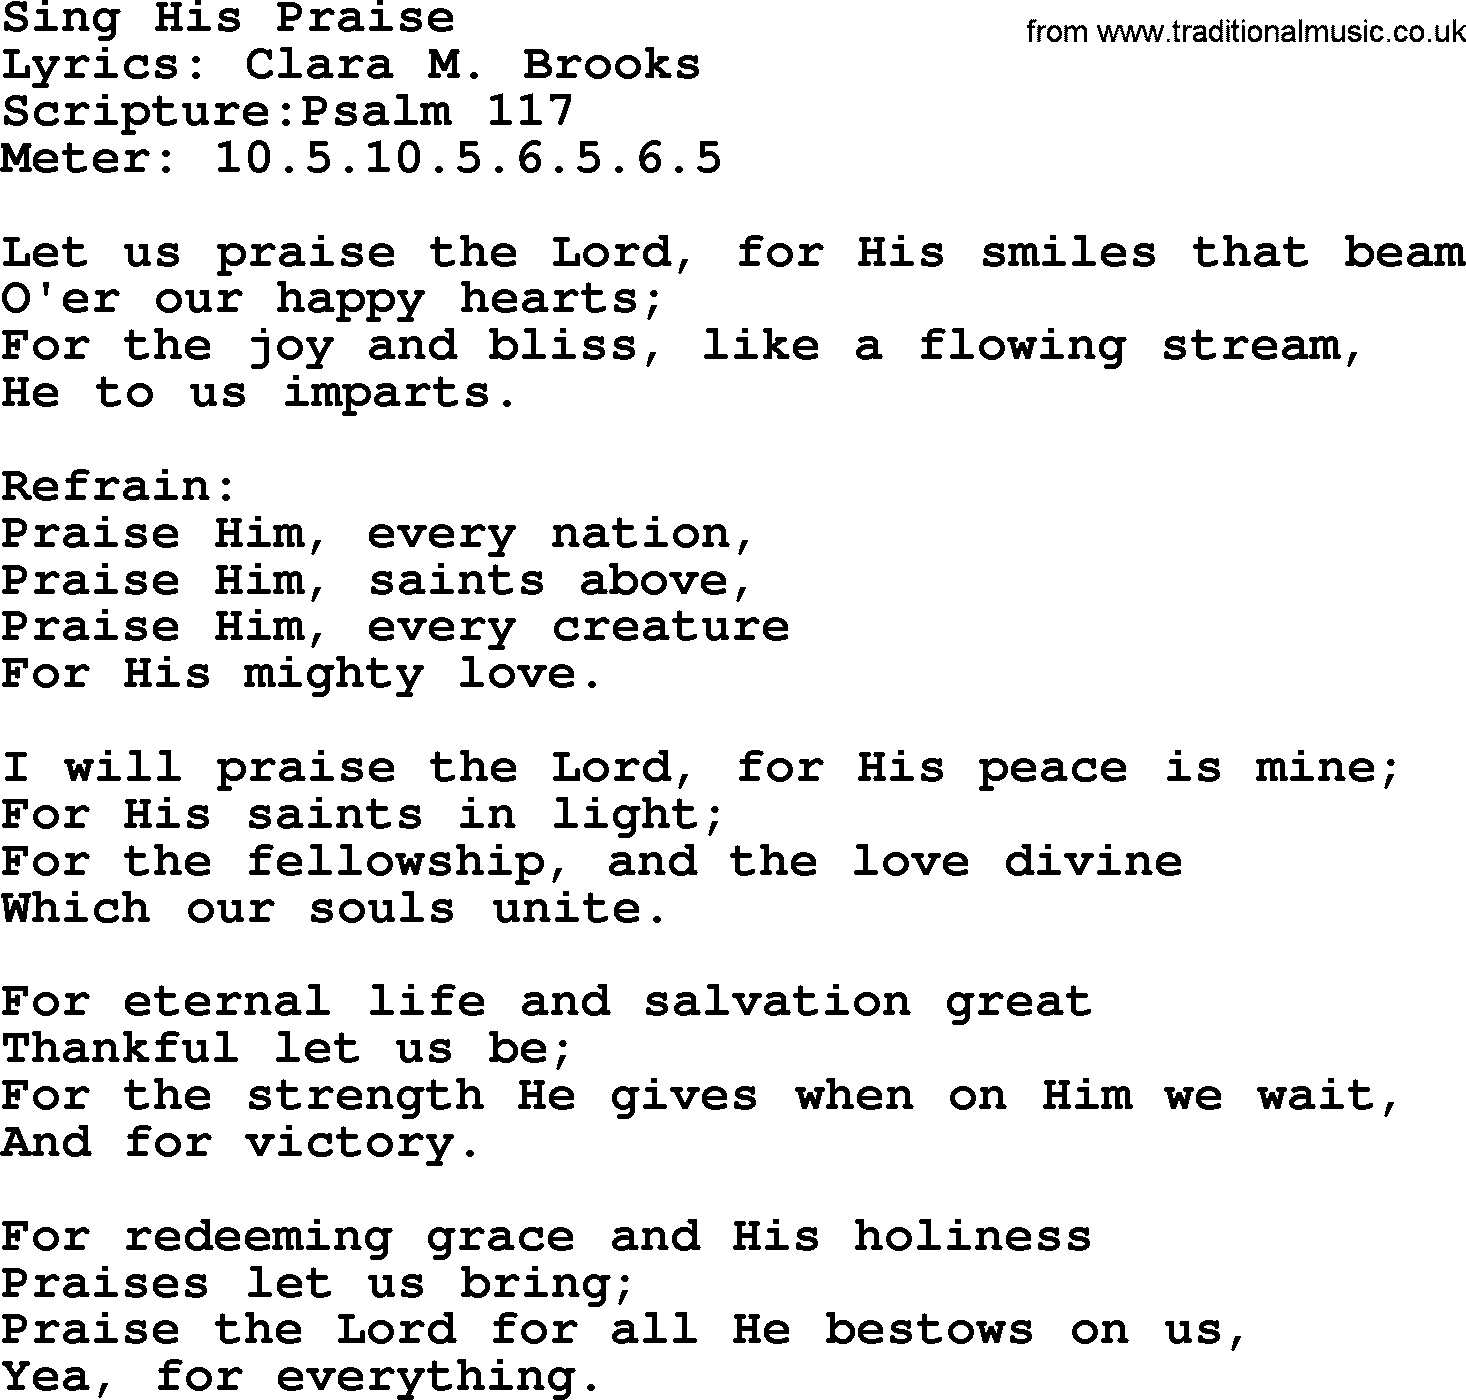 Hymns about  Angels, Hymn: Sing His Praise, lyrics, sheet music, midi & Mp3 music with PDF